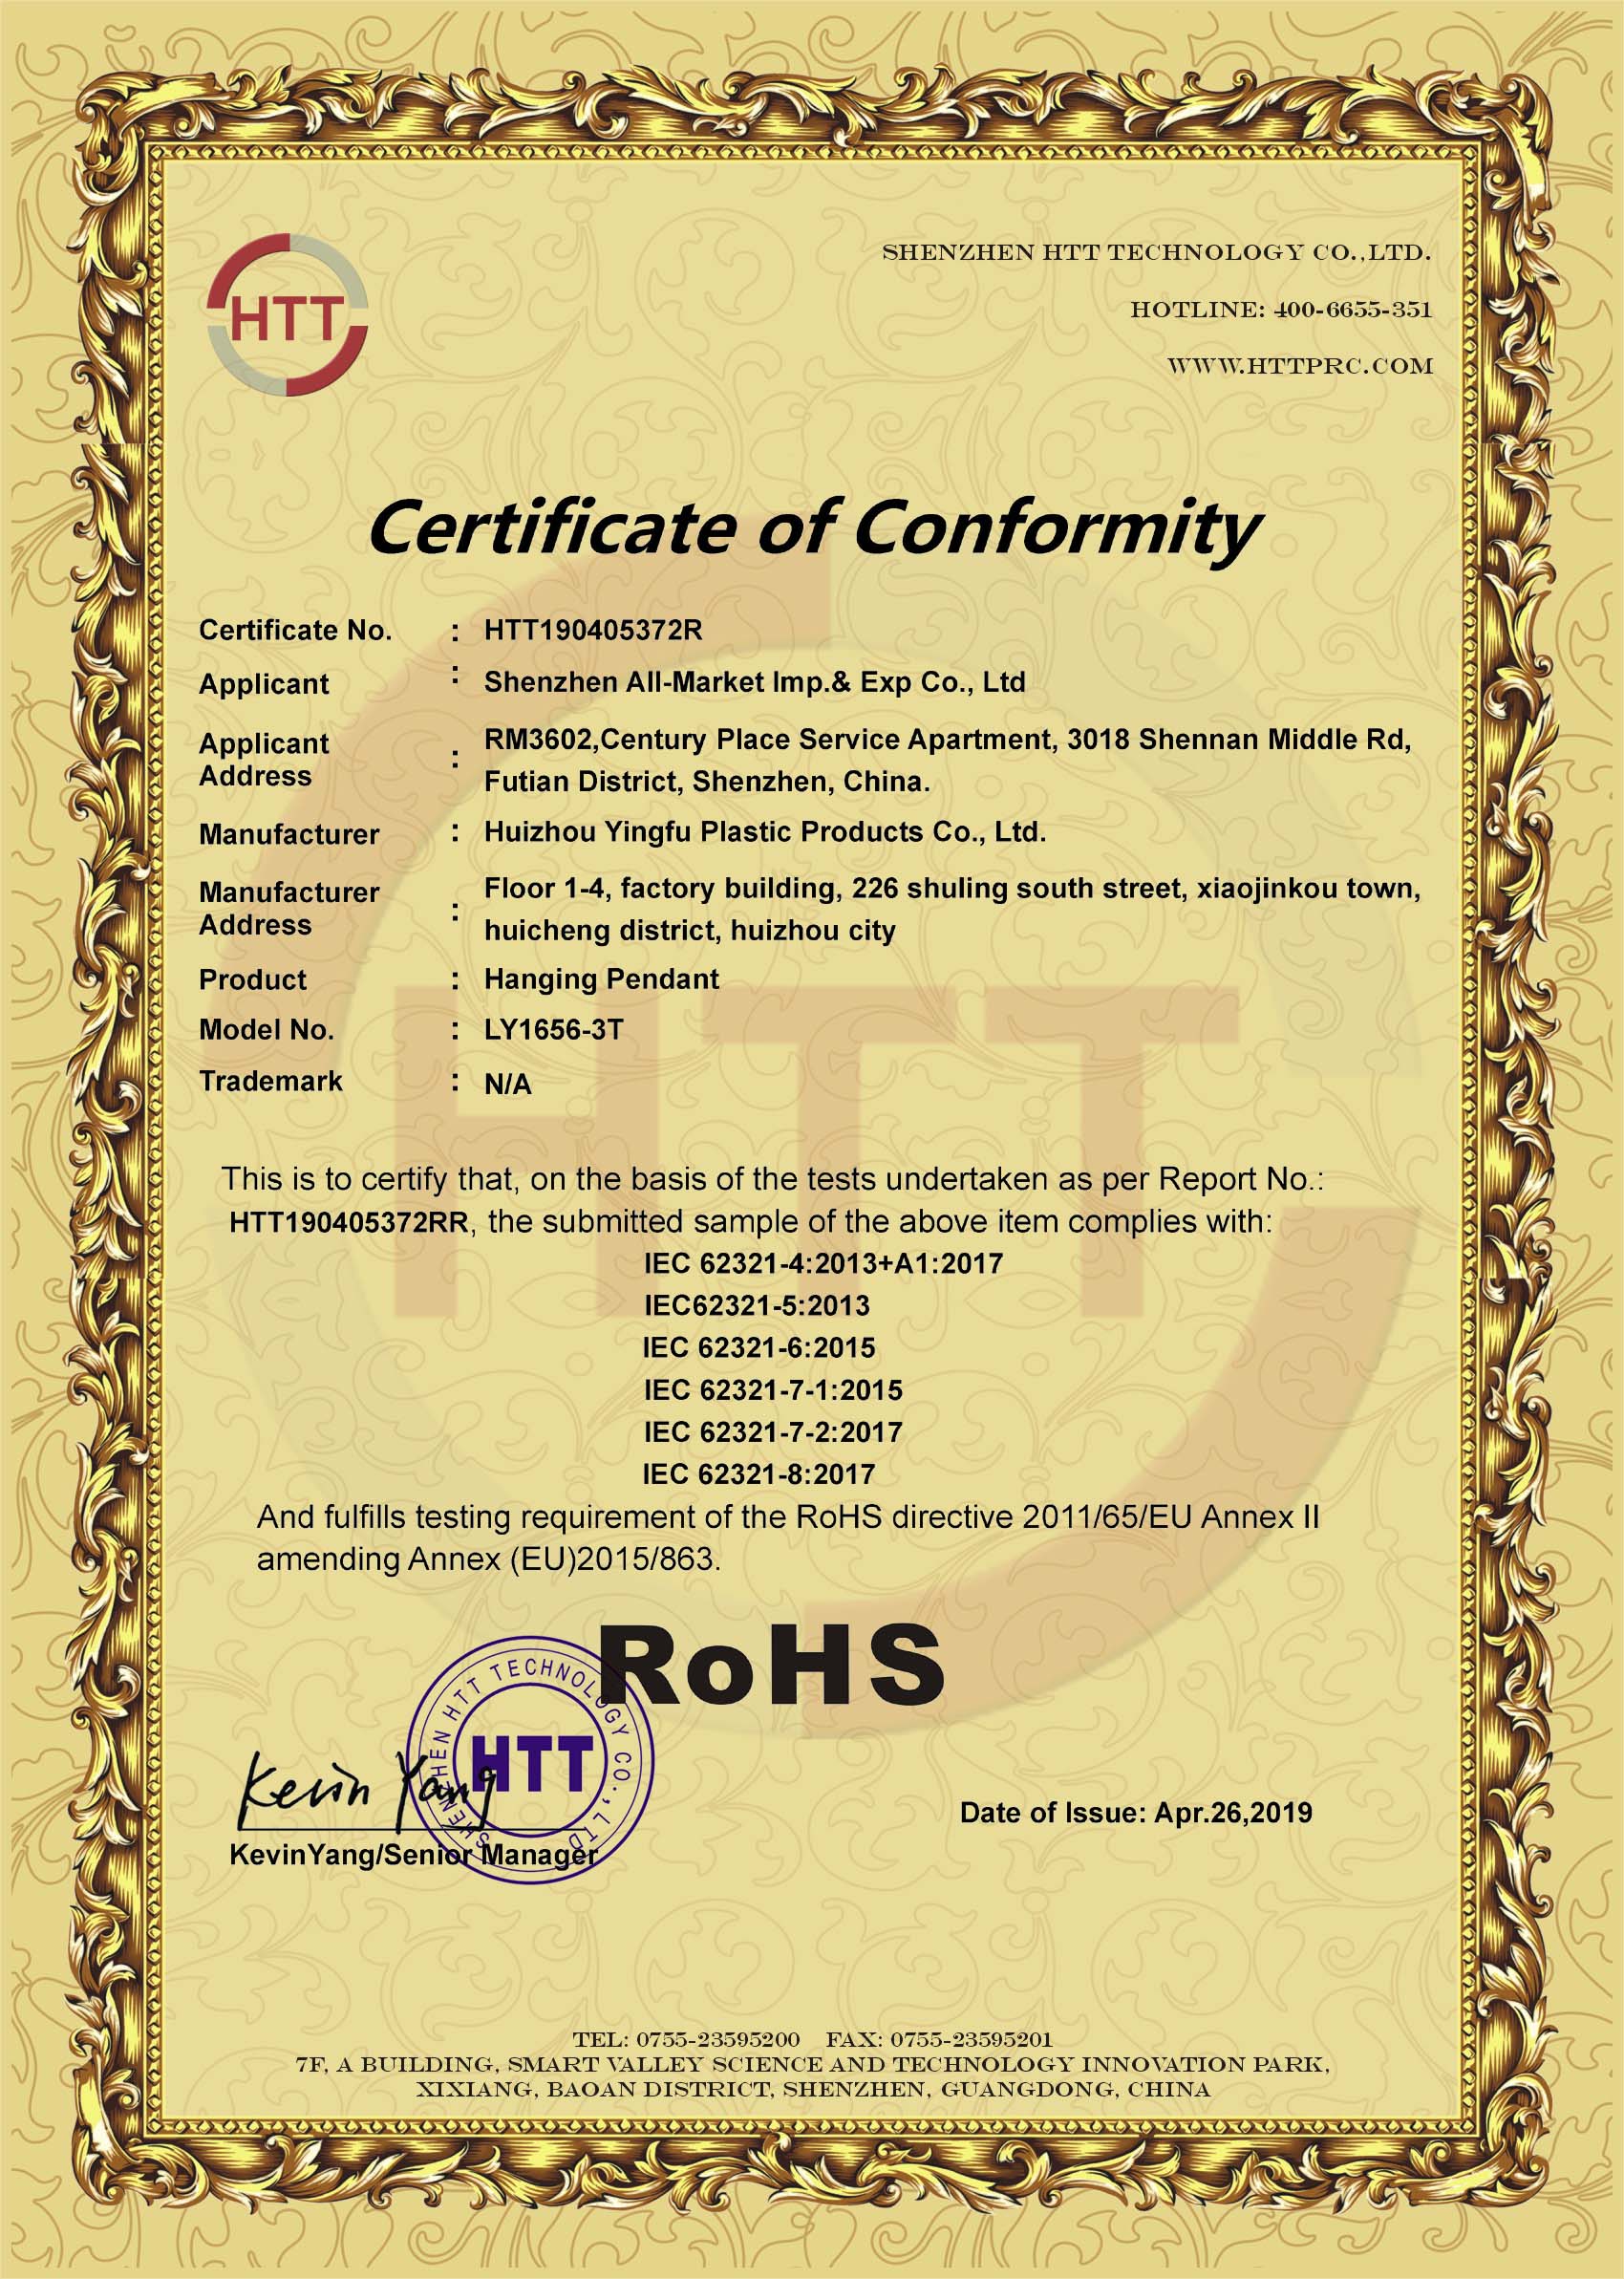 certificate of conformity ROHS.jpg